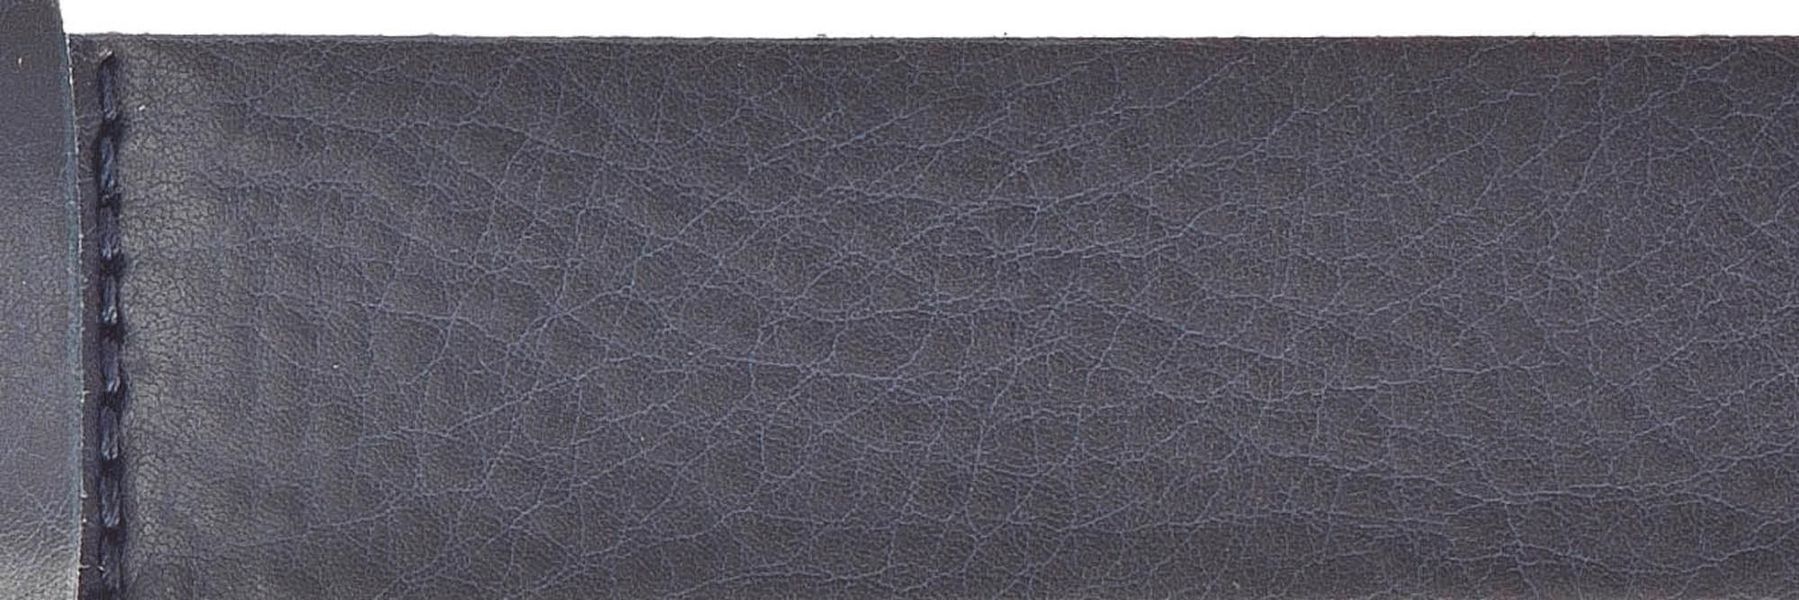 Vanzetti Leather belt - blue (0480)